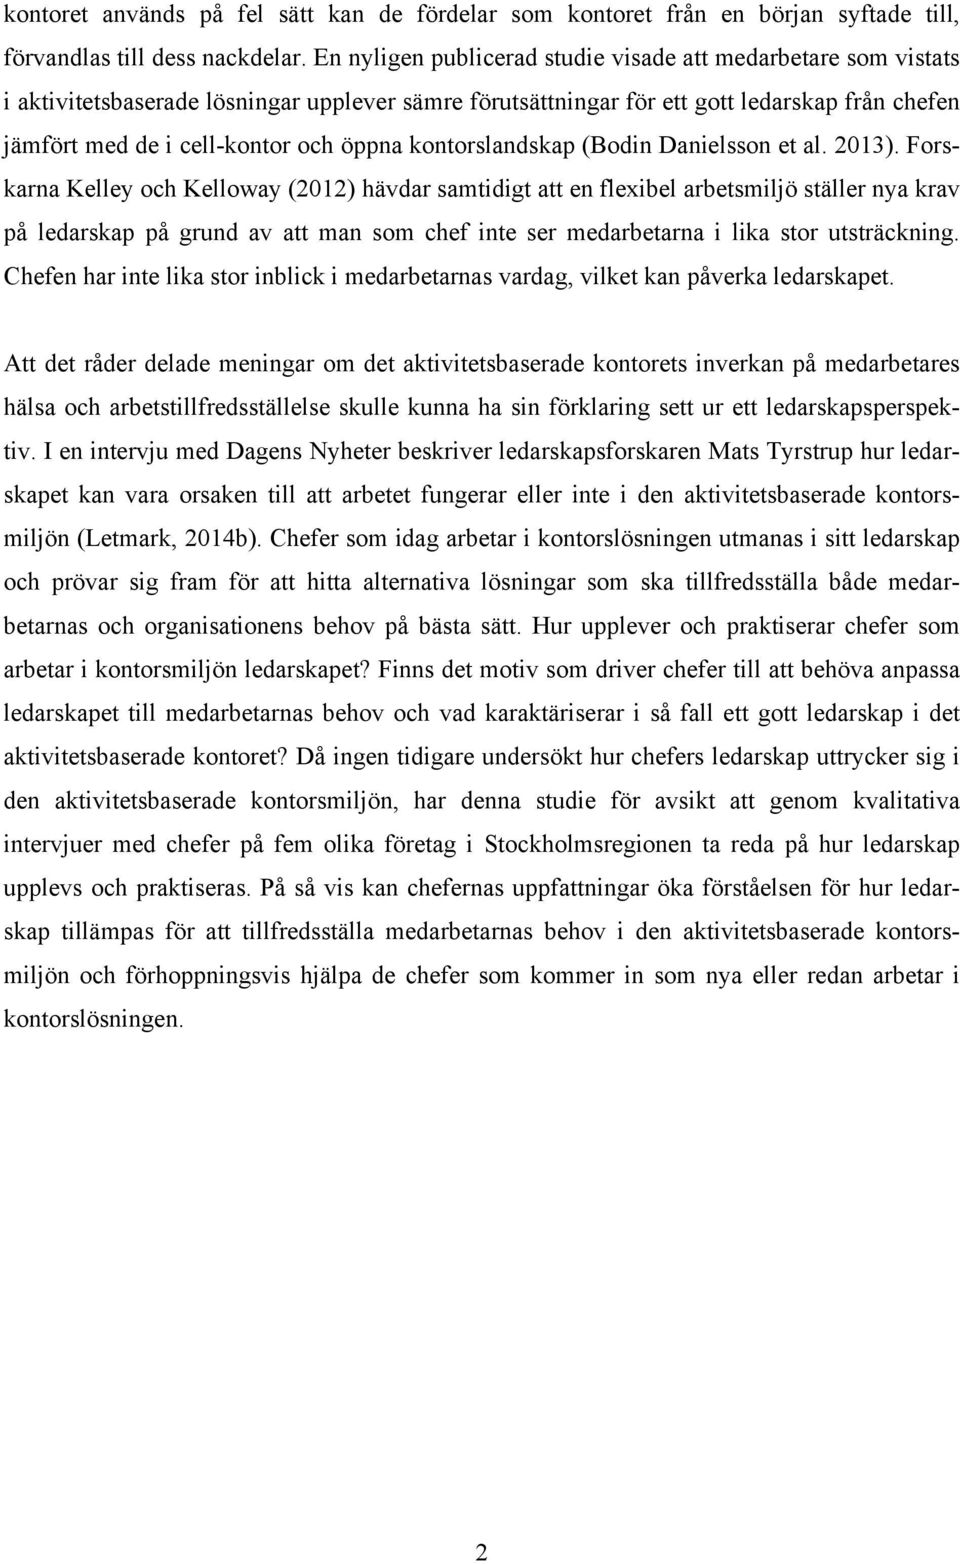 kontorslandskap (Bodin Danielsson et al. 2013).